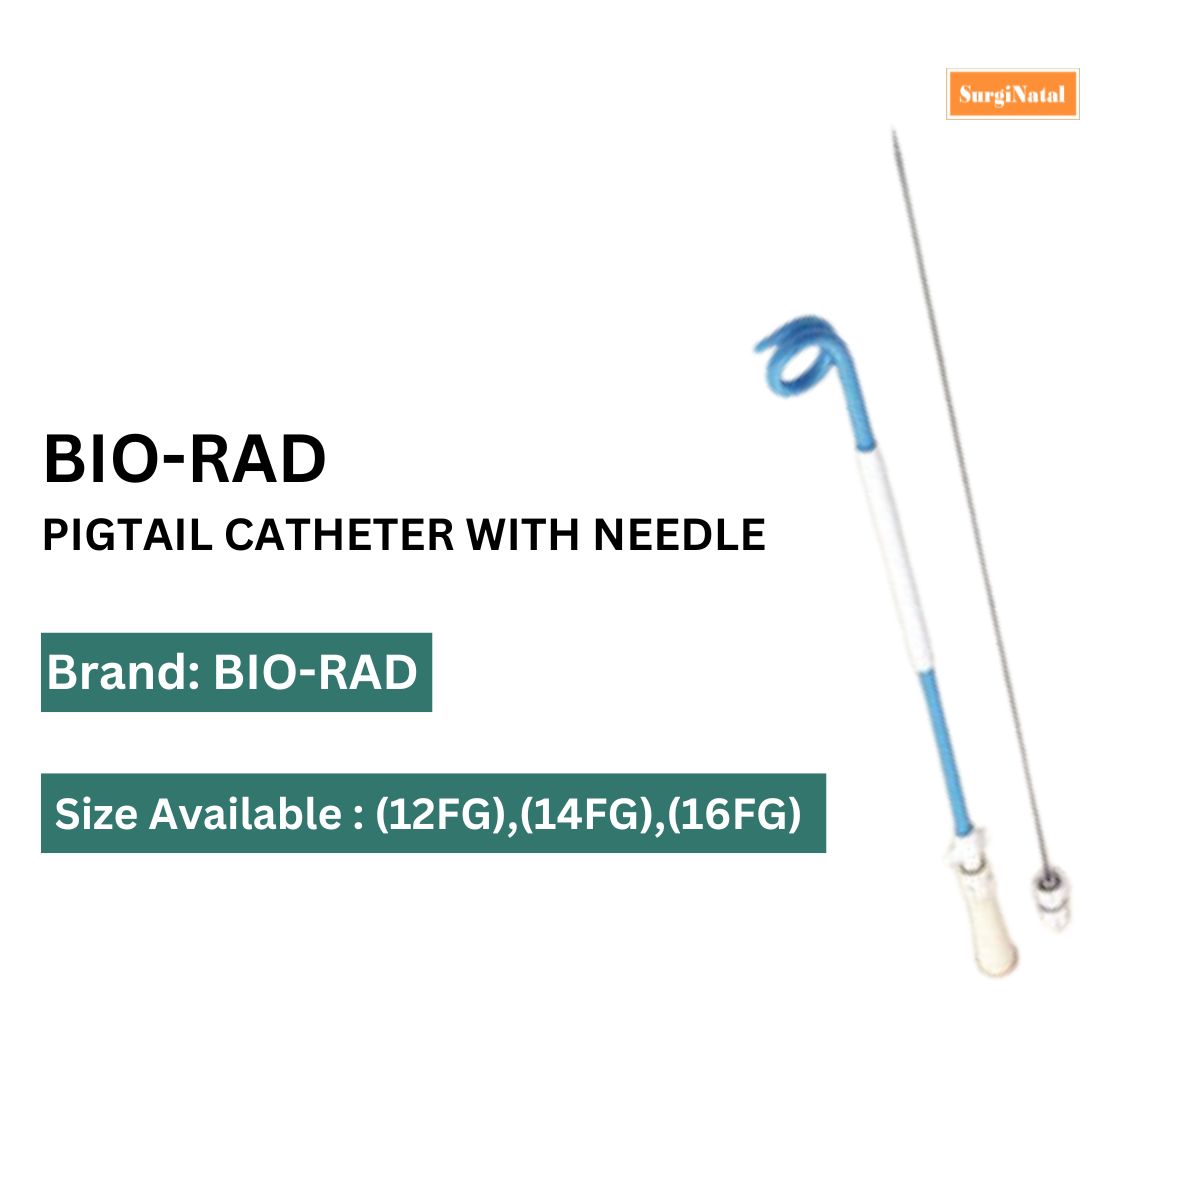 bio-rad pigtail catheter with needle